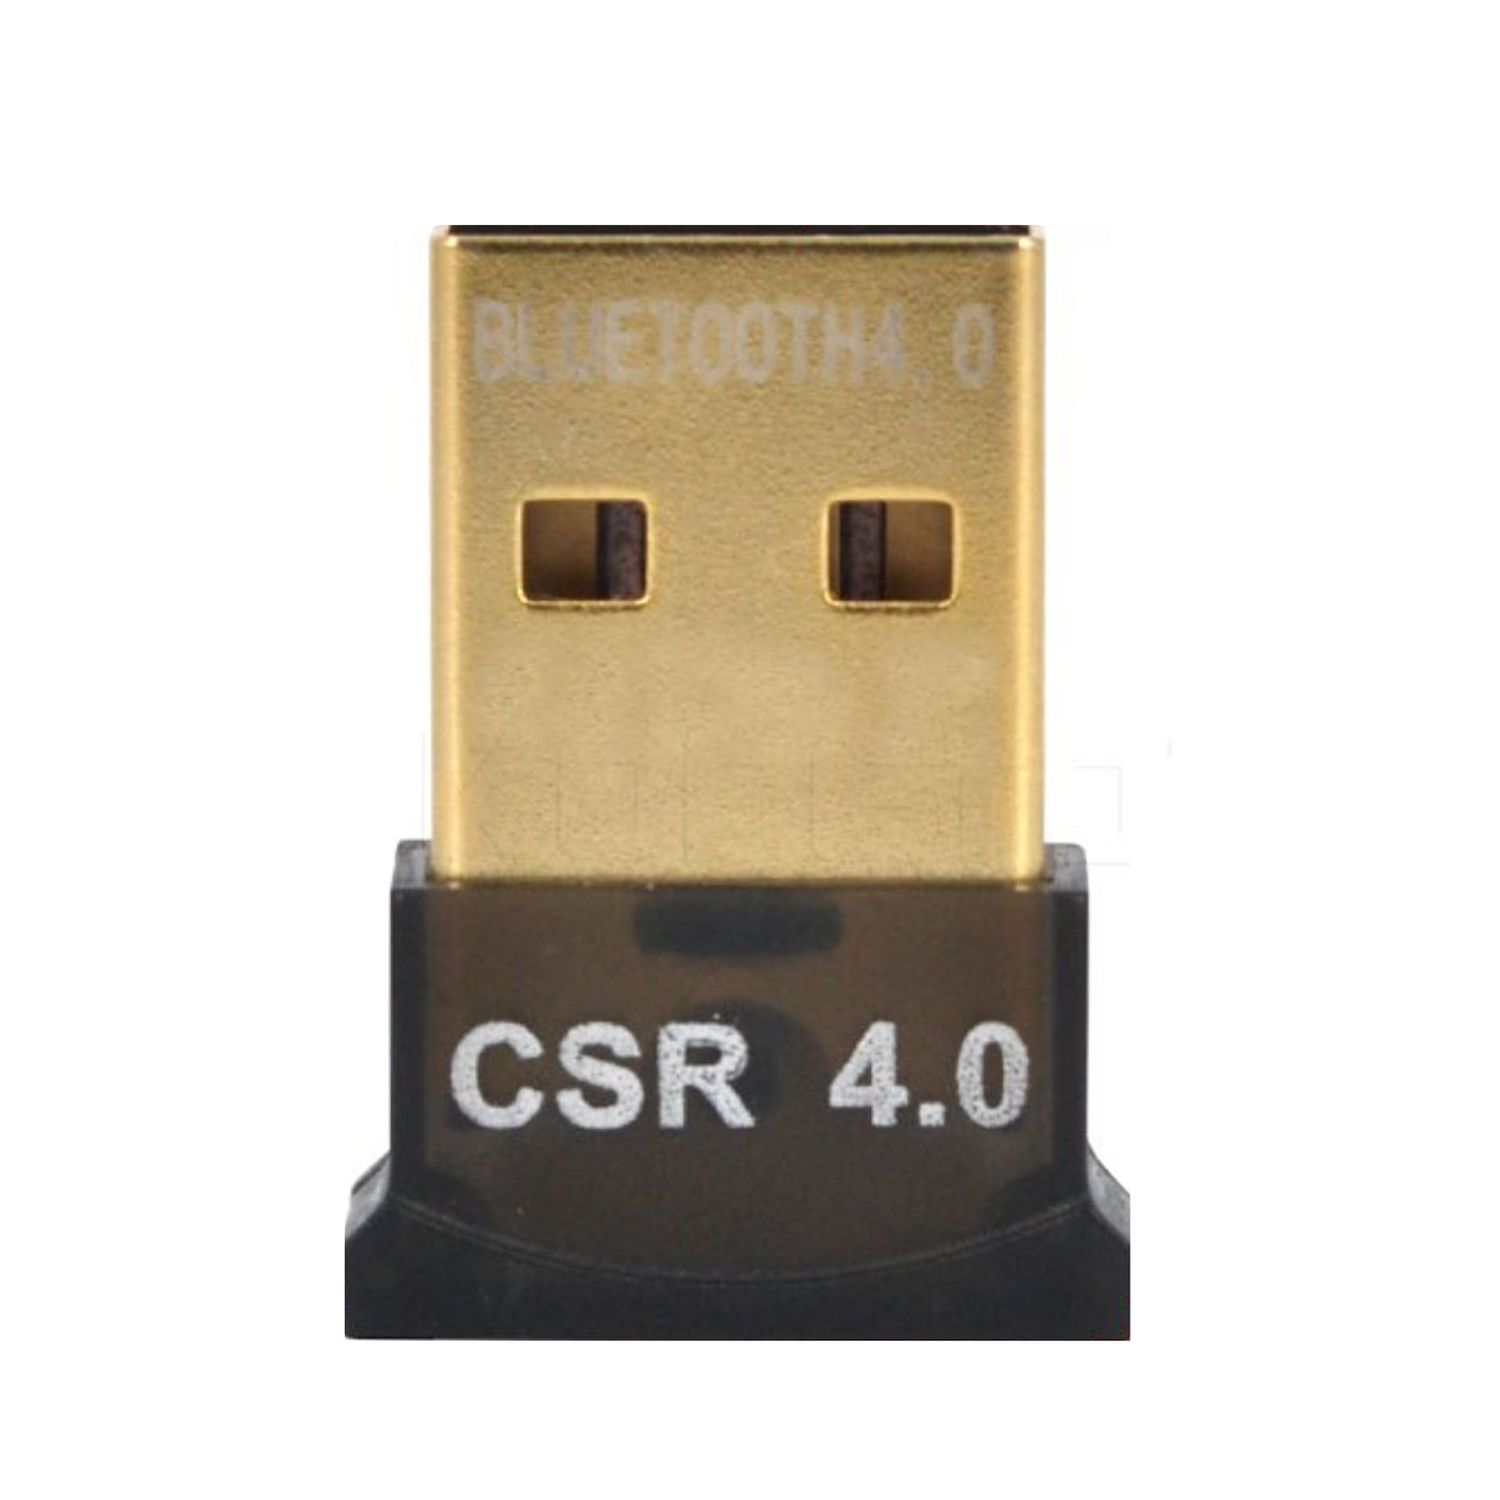 USB адаптер Bluetooth 4.0 BLE с поддержкой кодека AptX